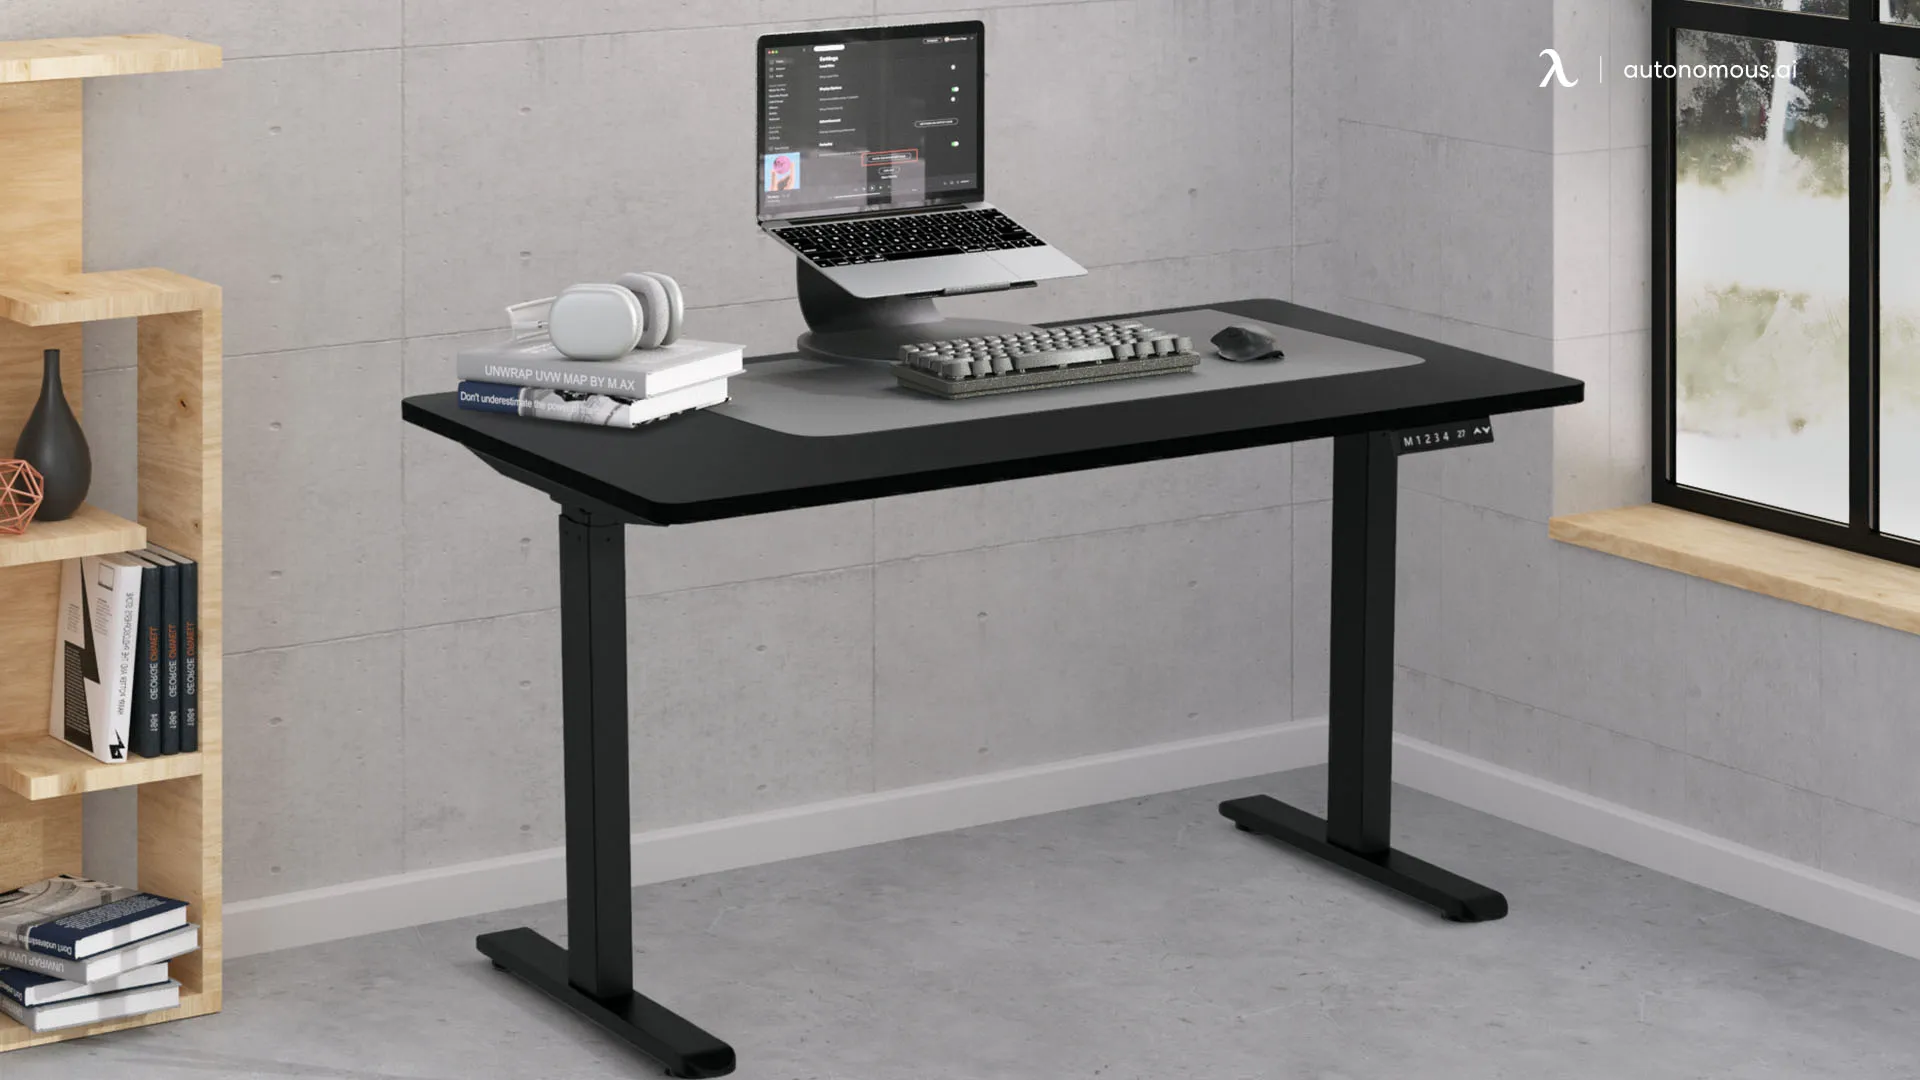 Compact Desk by Wistopht: Programmable Keypad